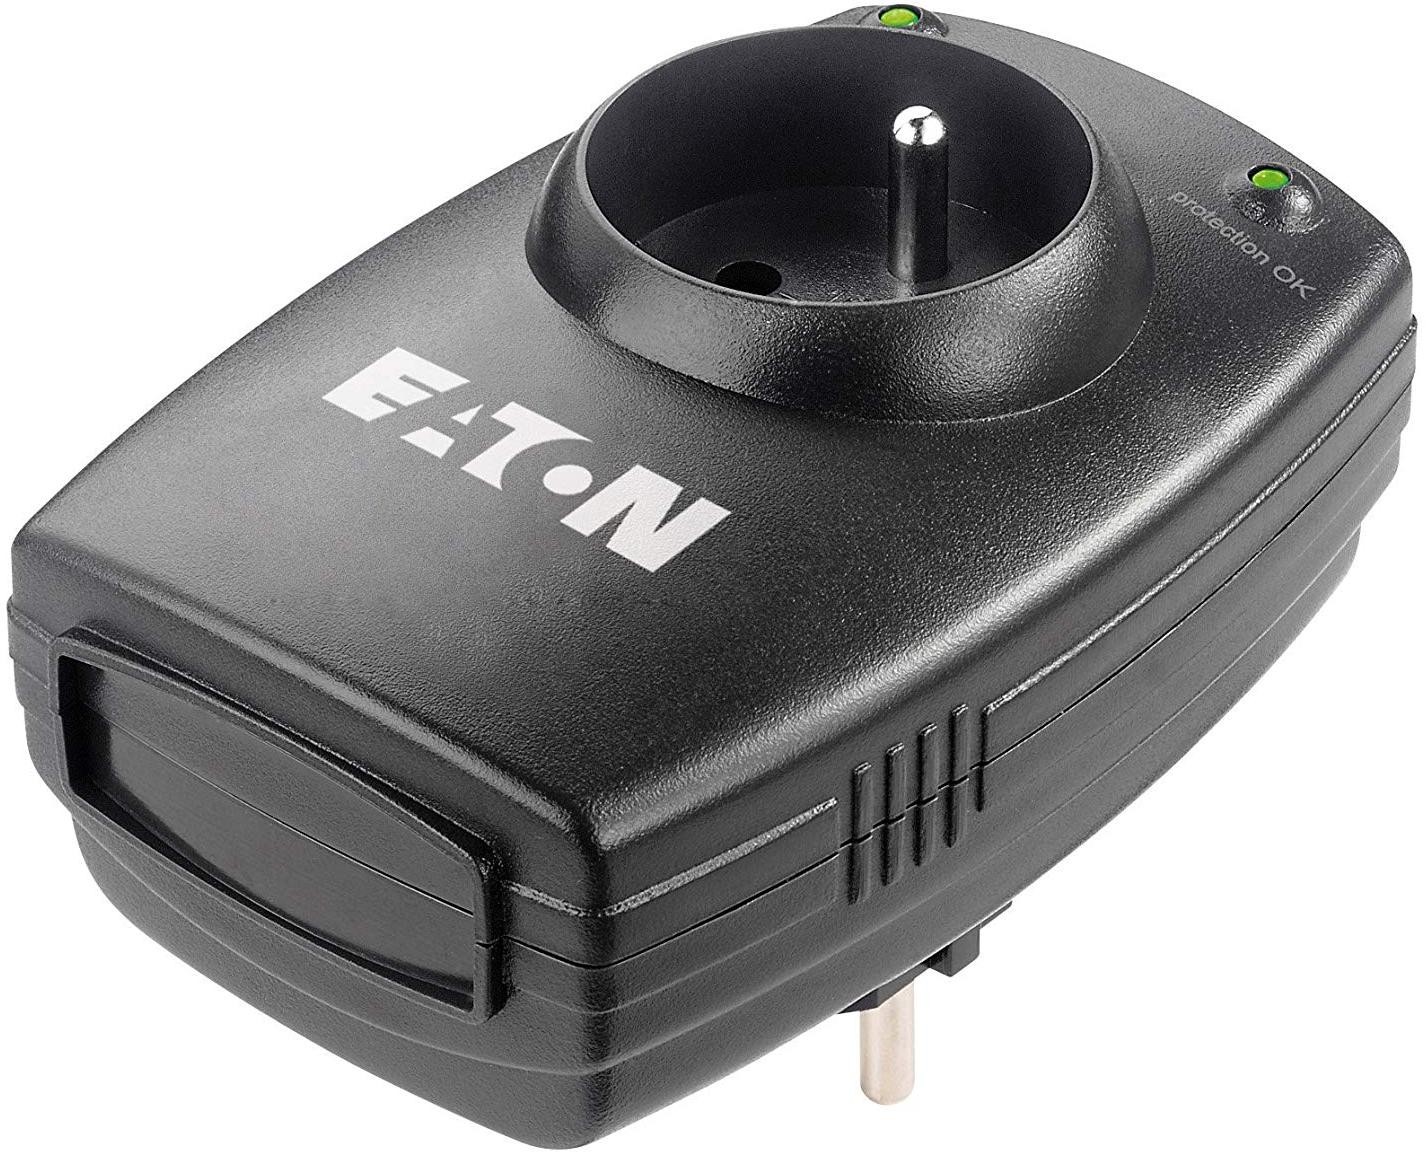 Eaton Multiprise Protection Box 8 Tel@FR